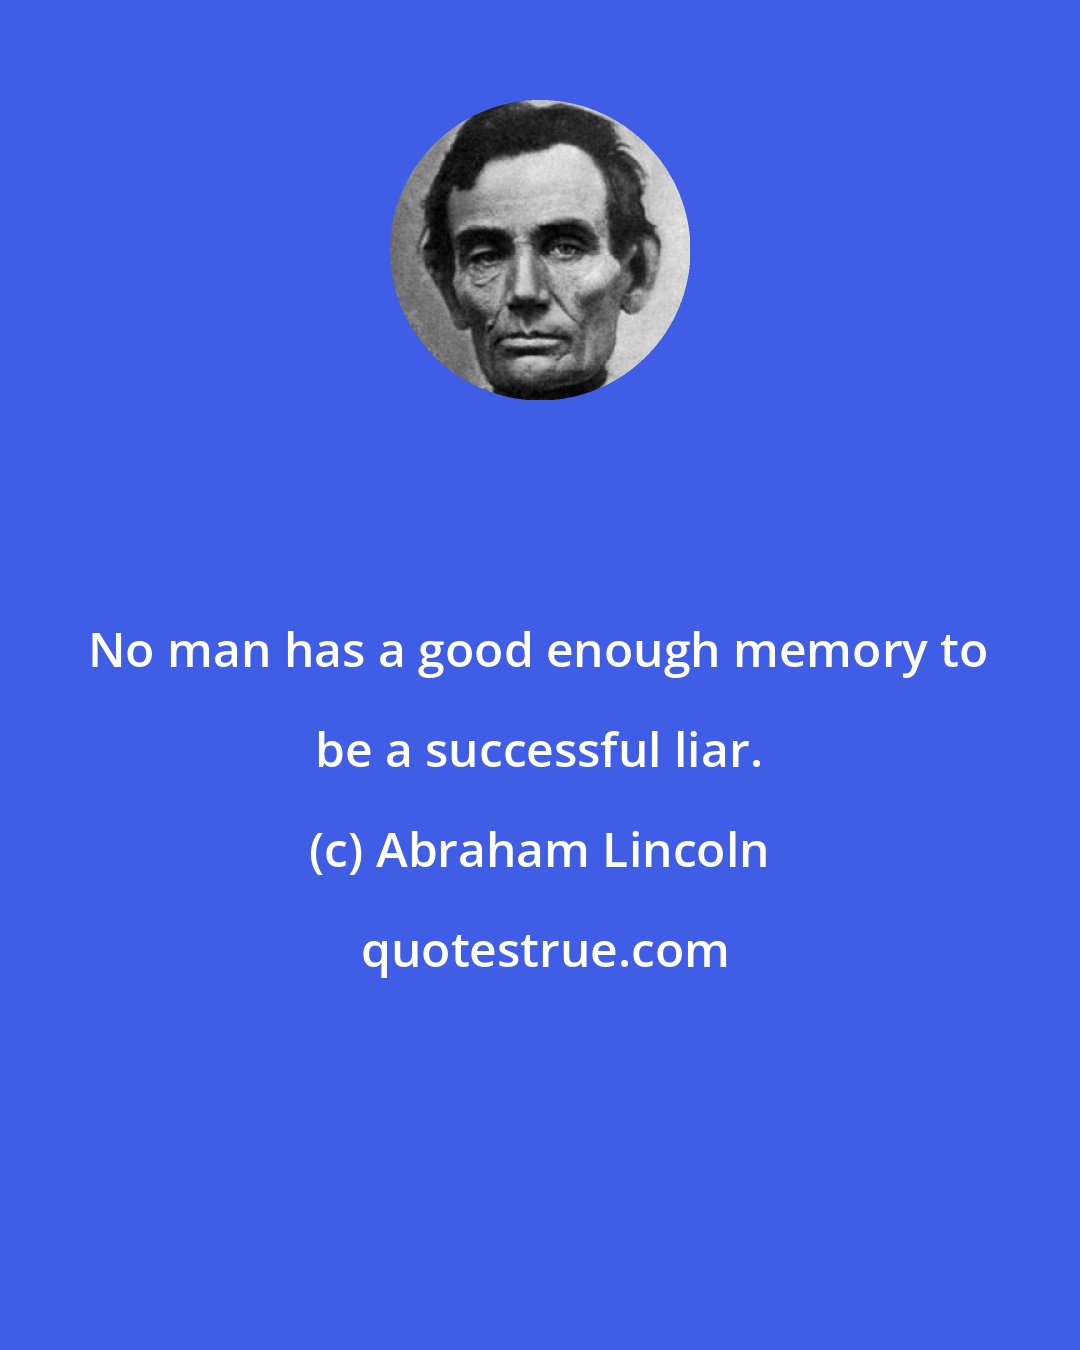 Abraham Lincoln: No man has a good enough memory to be a successful liar.